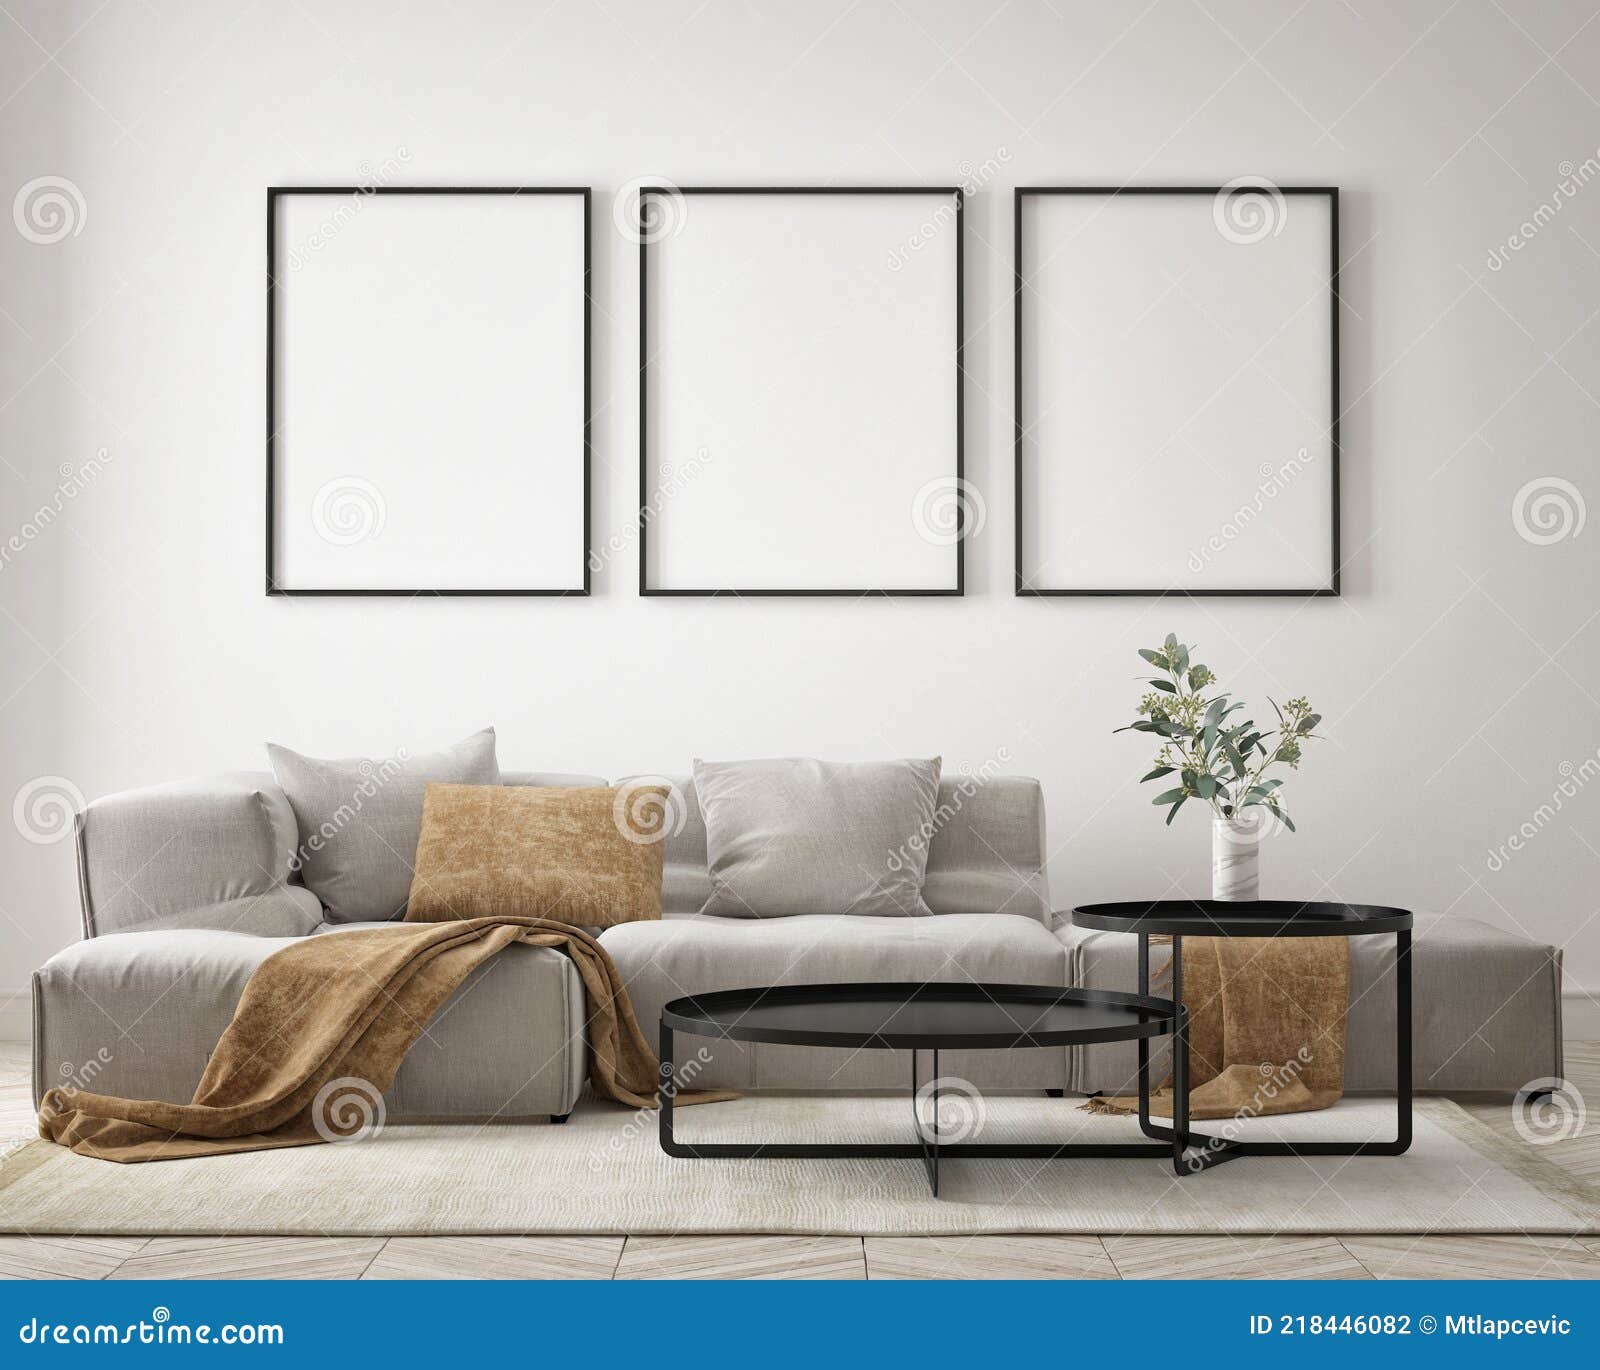 mock up poster frame in modern interior background living room minimalistic style 3d render